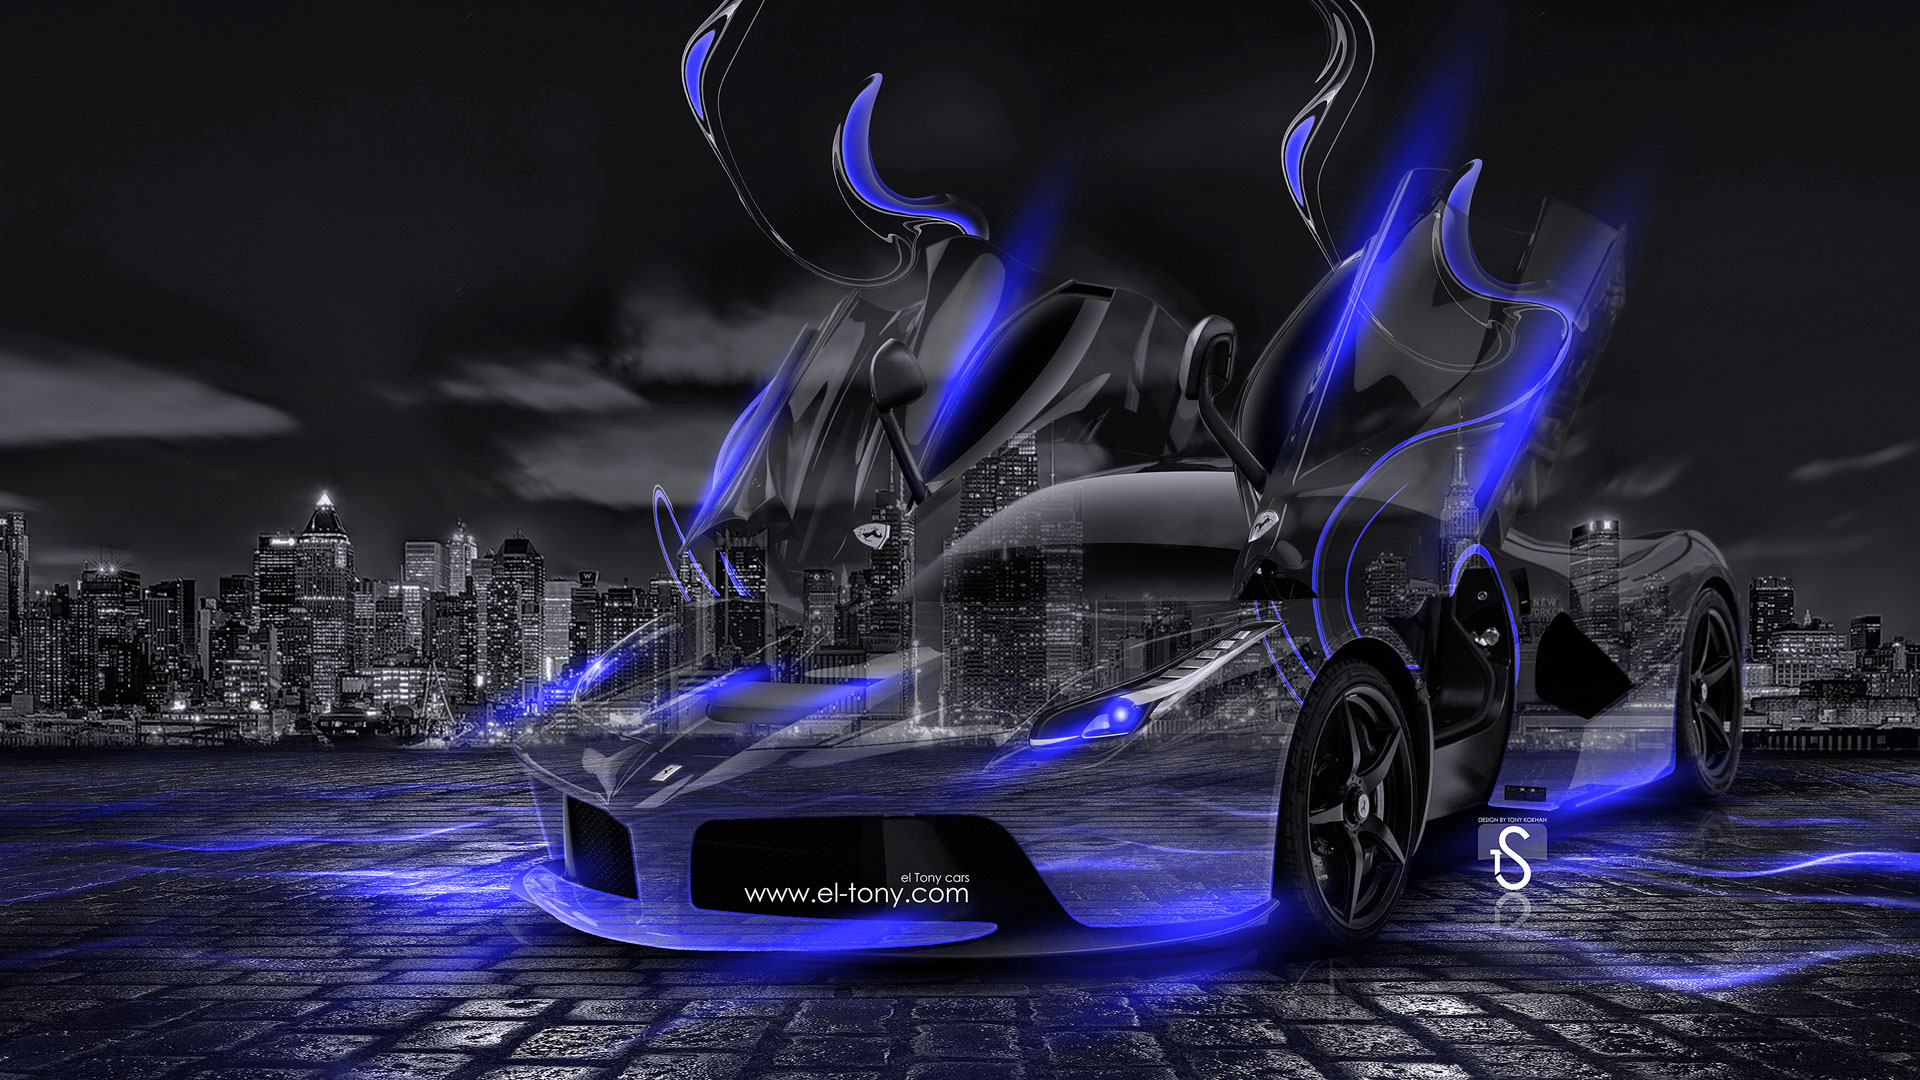 Ferrari Laferrari Fantasy Crystal City Energy Car HD Wallpaper